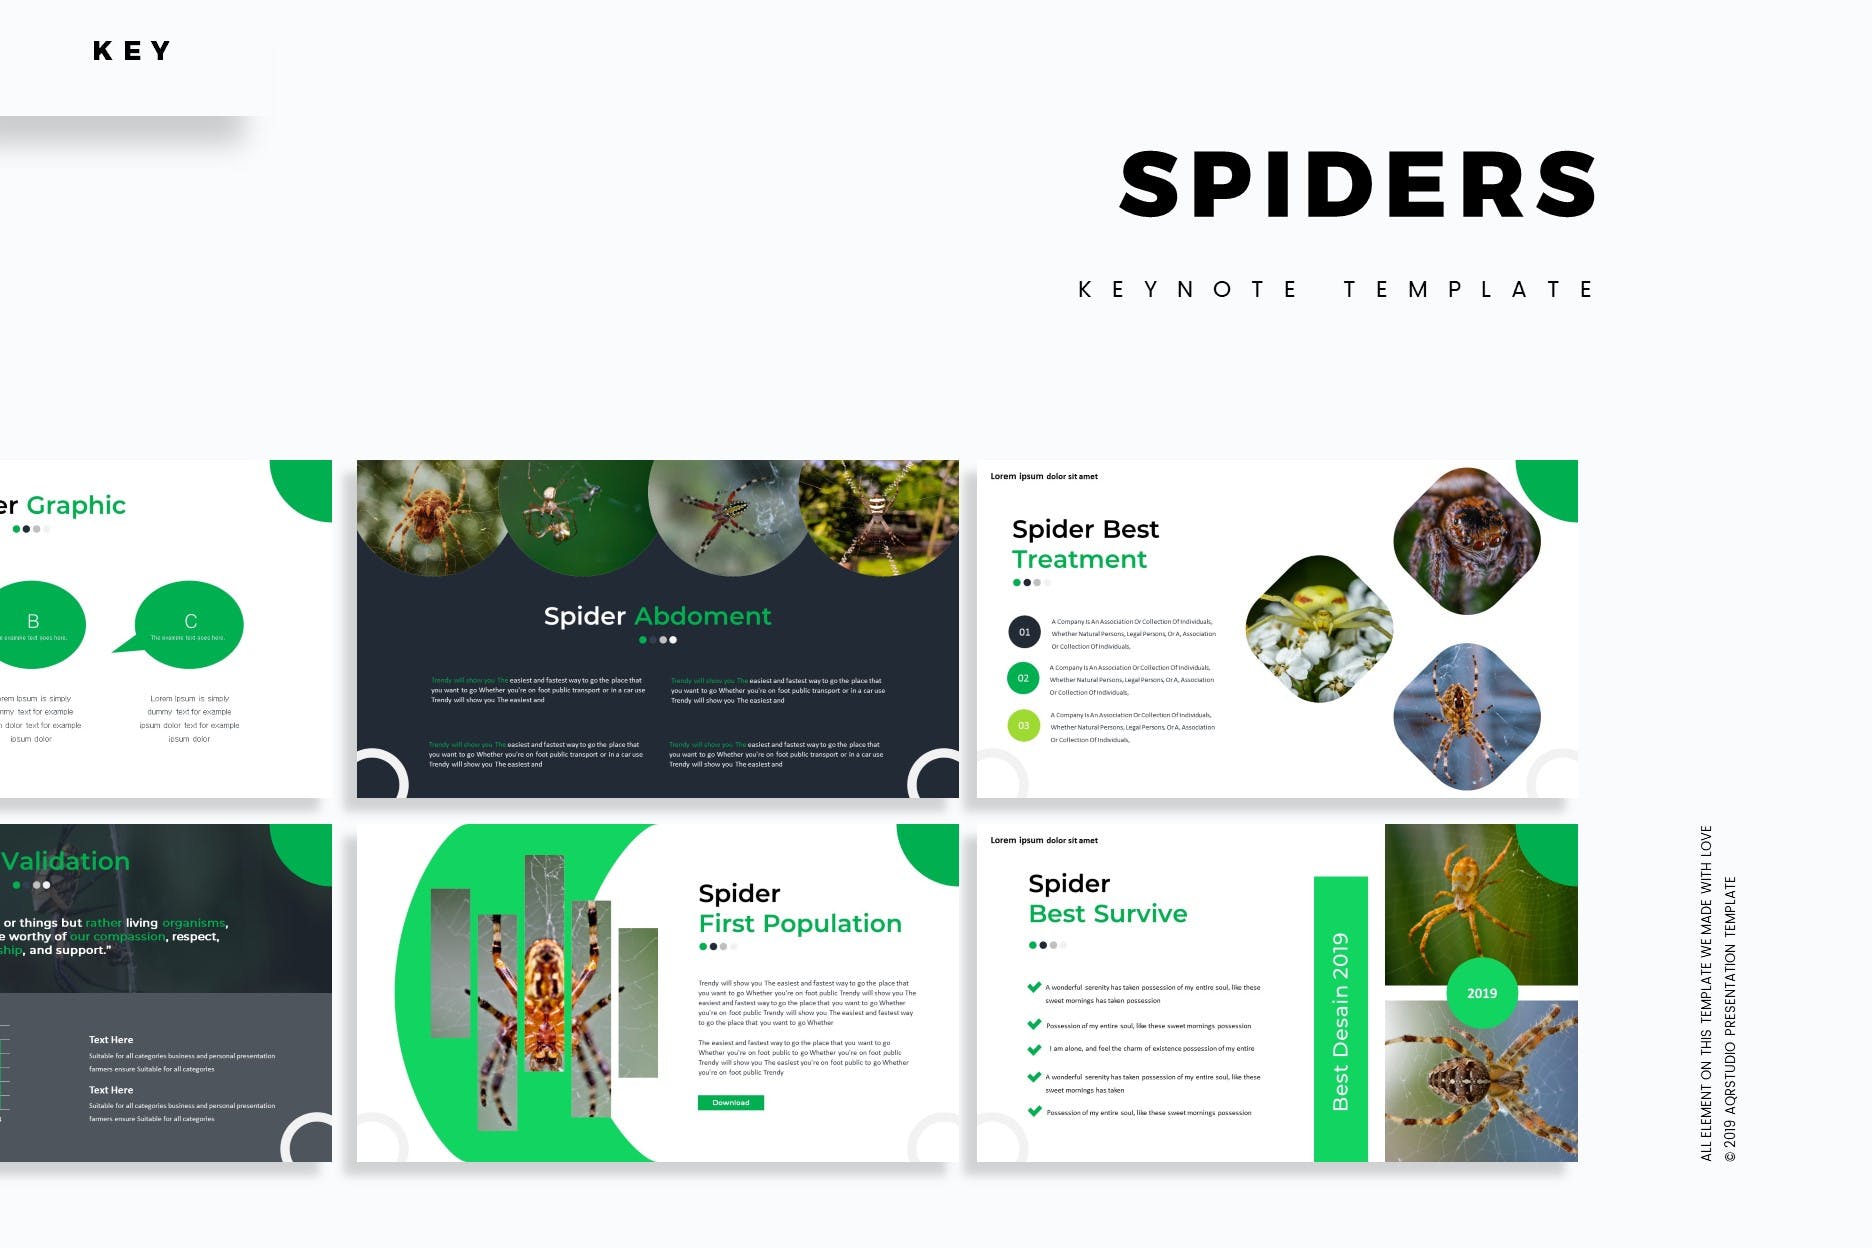 幻灯片蜘蛛节肢动物Keynote模板下载 Spiders – Keynote Template设计素材模板